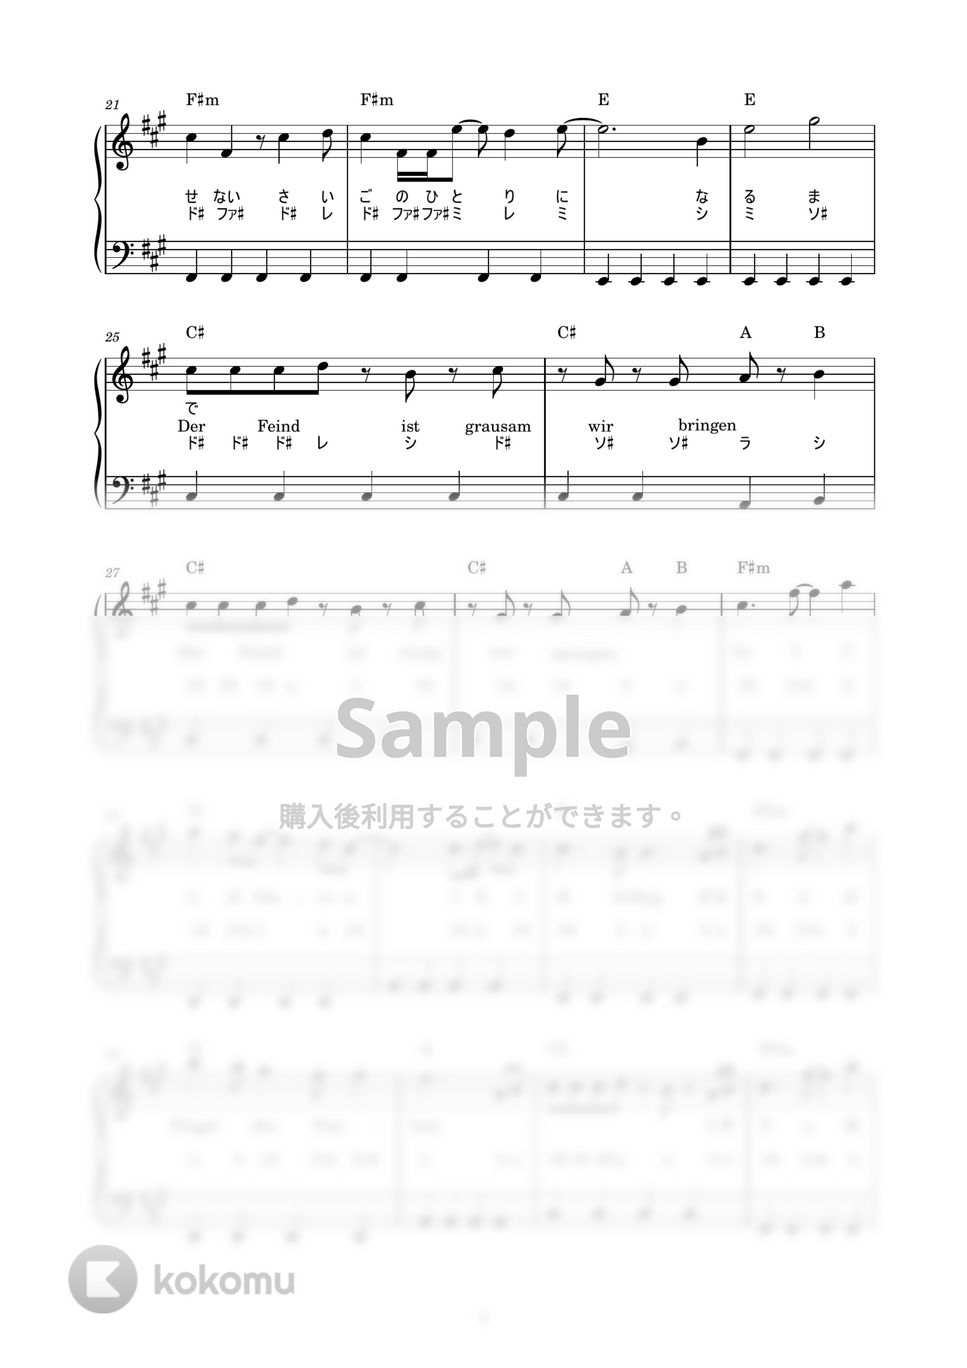 LINKED HORIZON - 自由の翼 (かんたん / 歌詞付き / ドレミ付き / 初心者) by piano.tokyo